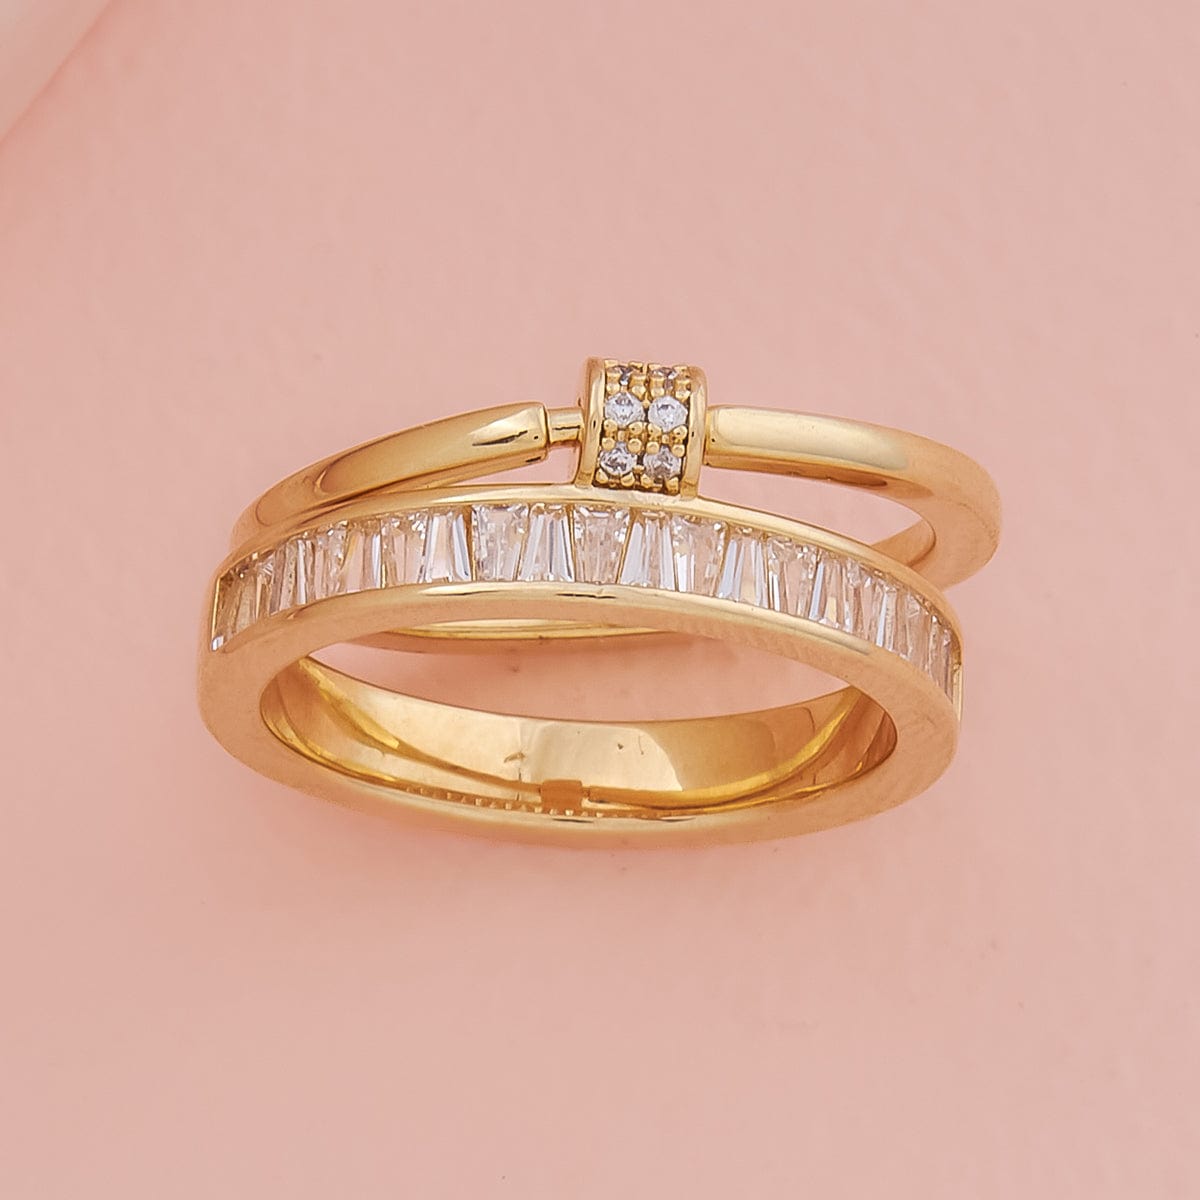 Trendy Gold Plated Finger Rings, सोने का पानी चढ़ी हुई अंगूठी -  Allureverse, Mumbai | ID: 2850358631897